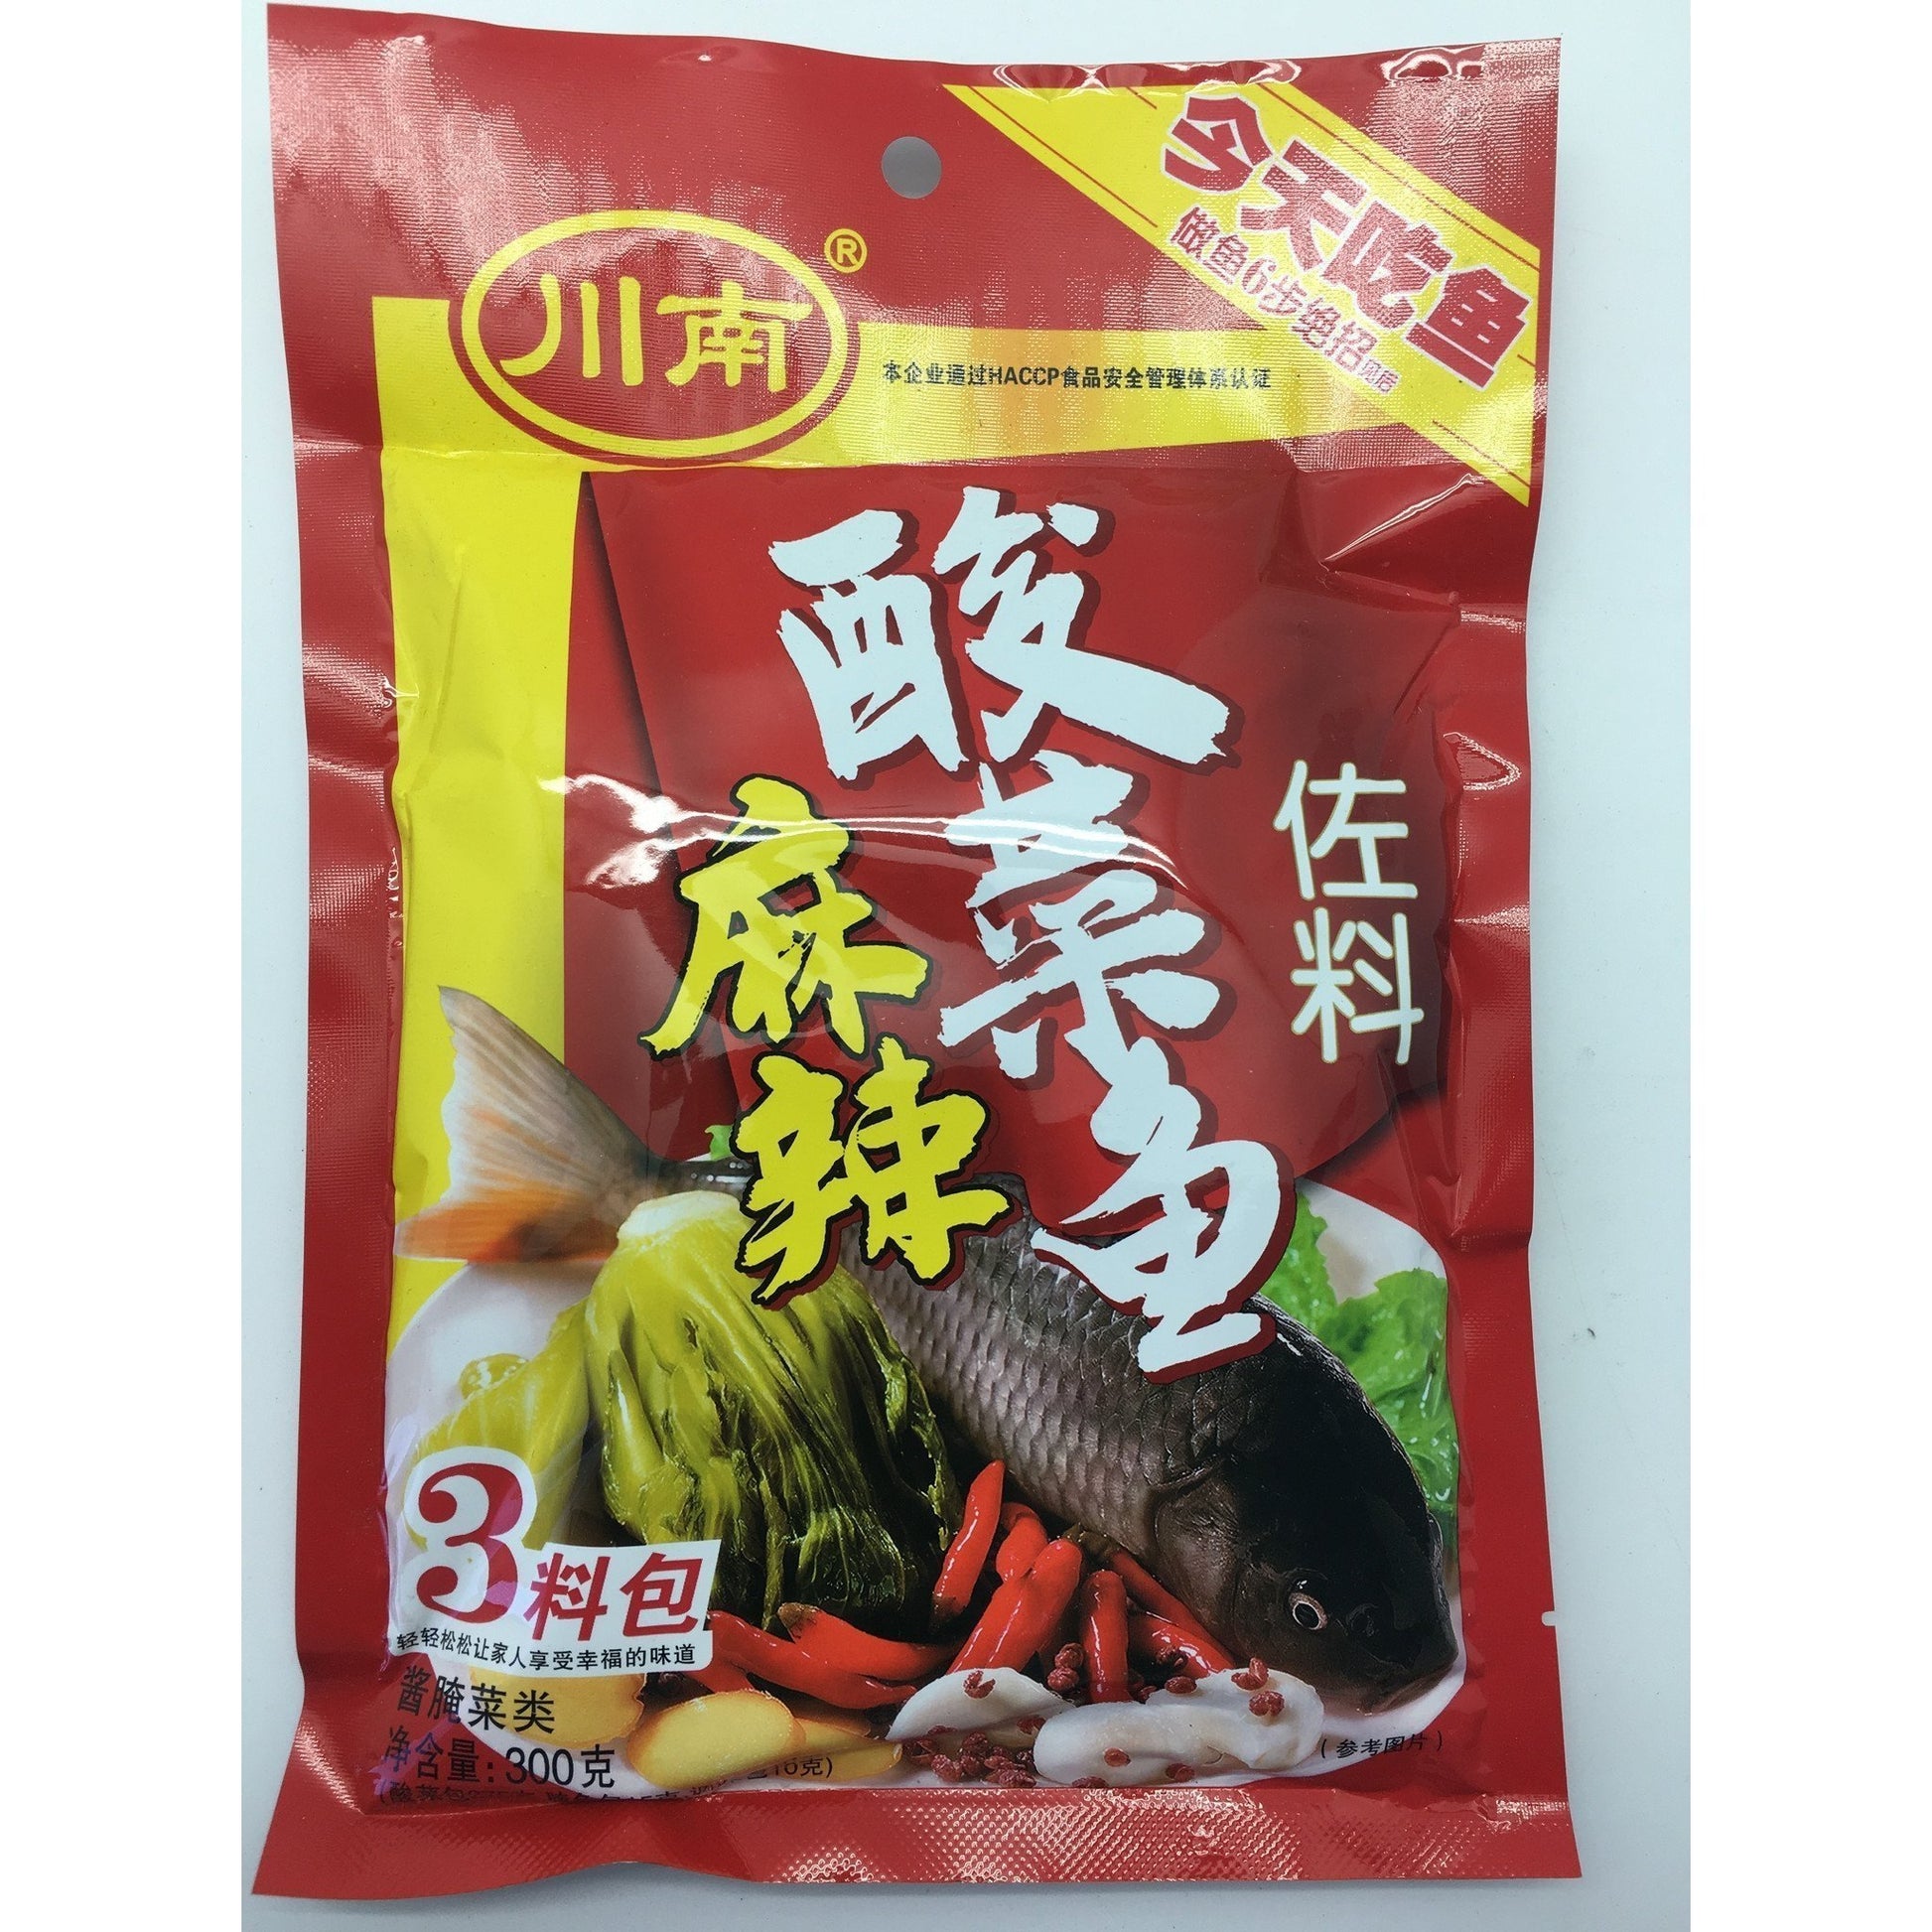 Q011F Chuan Nan Brand - Soup Base For Fish 300g - 30 bags / 1 CTN - New Eastland Pty Ltd - Asian food wholesalers